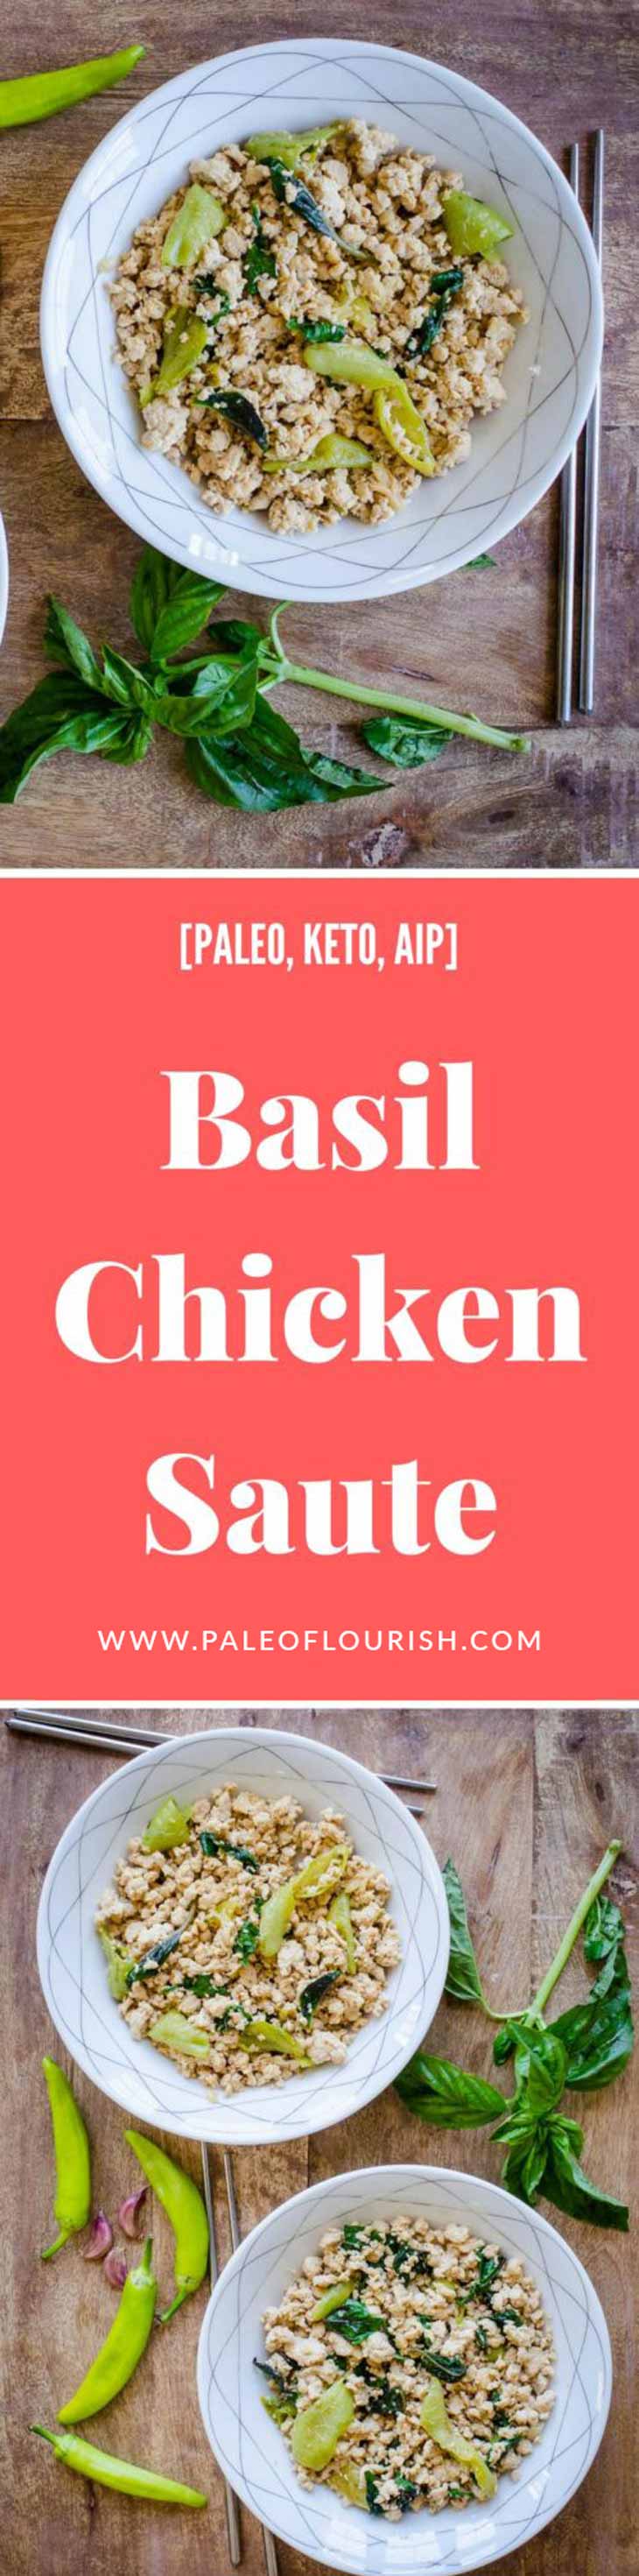 Basil Chicken Saute Recipe [Paleo, Keto, AIP] #paleo #keto #aip #recipes - https://paleoflourish.com/basil-chicken-saute-recipe-paleo-keto-aip